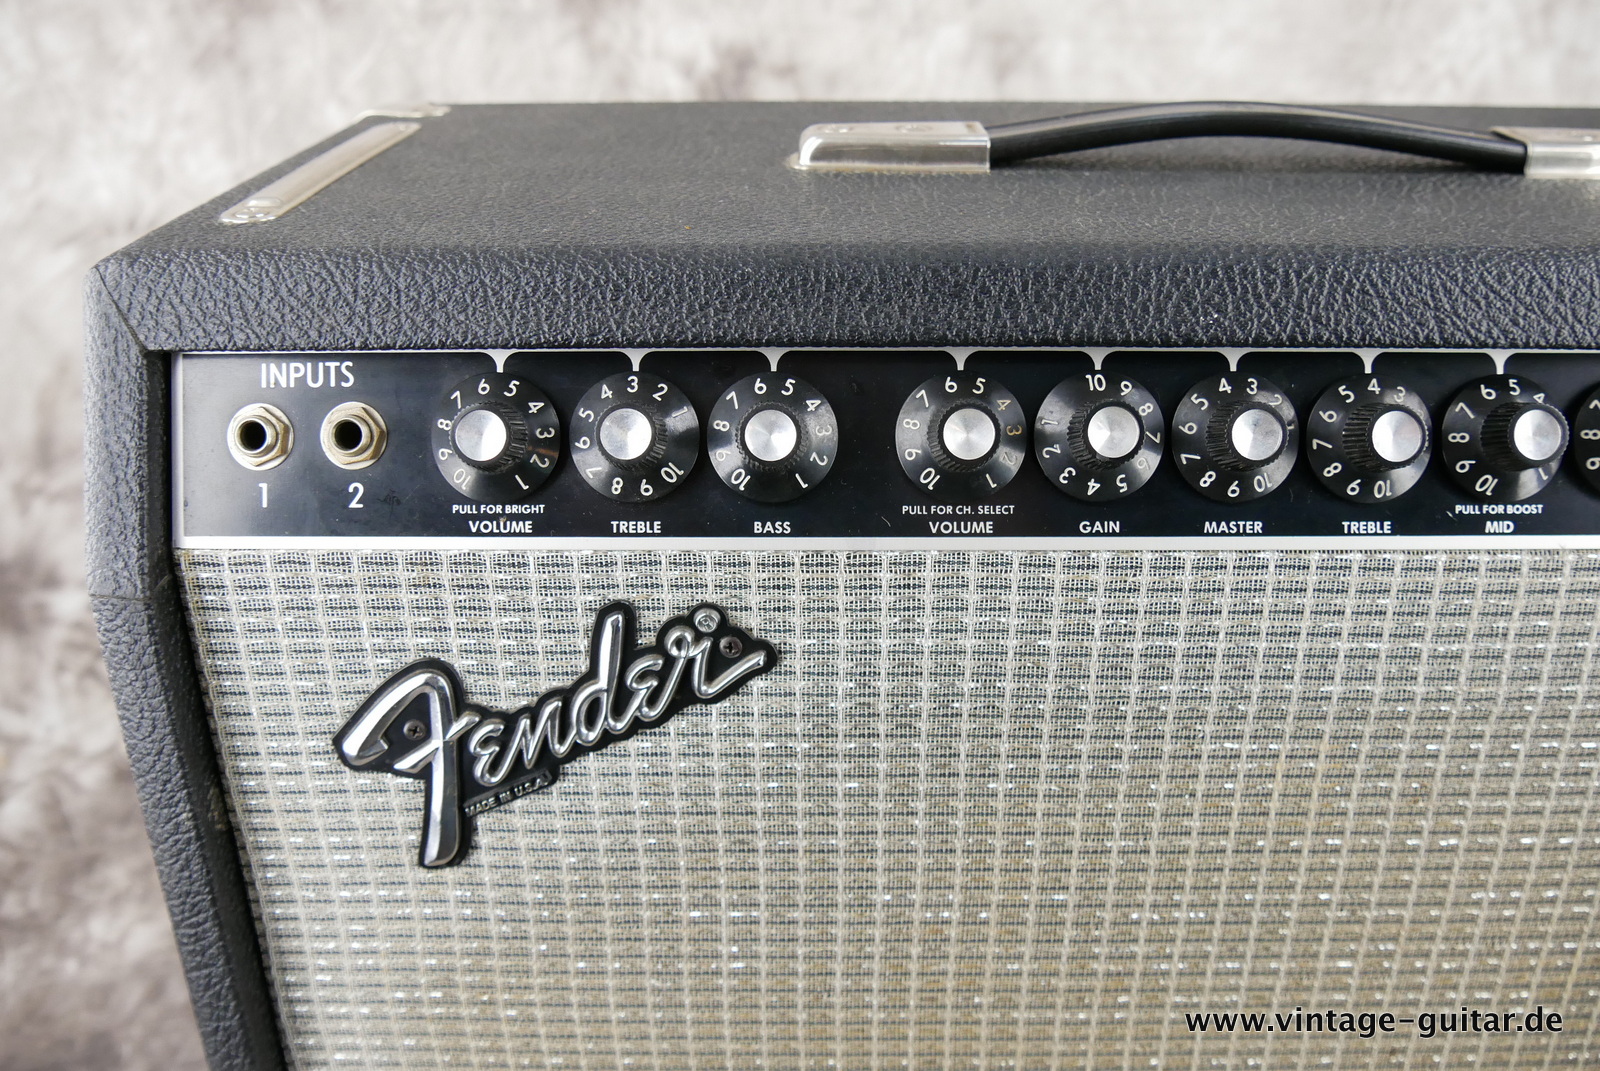 Fender-Deluxe-Reverb-II-1983-black-tolex-002.JPG